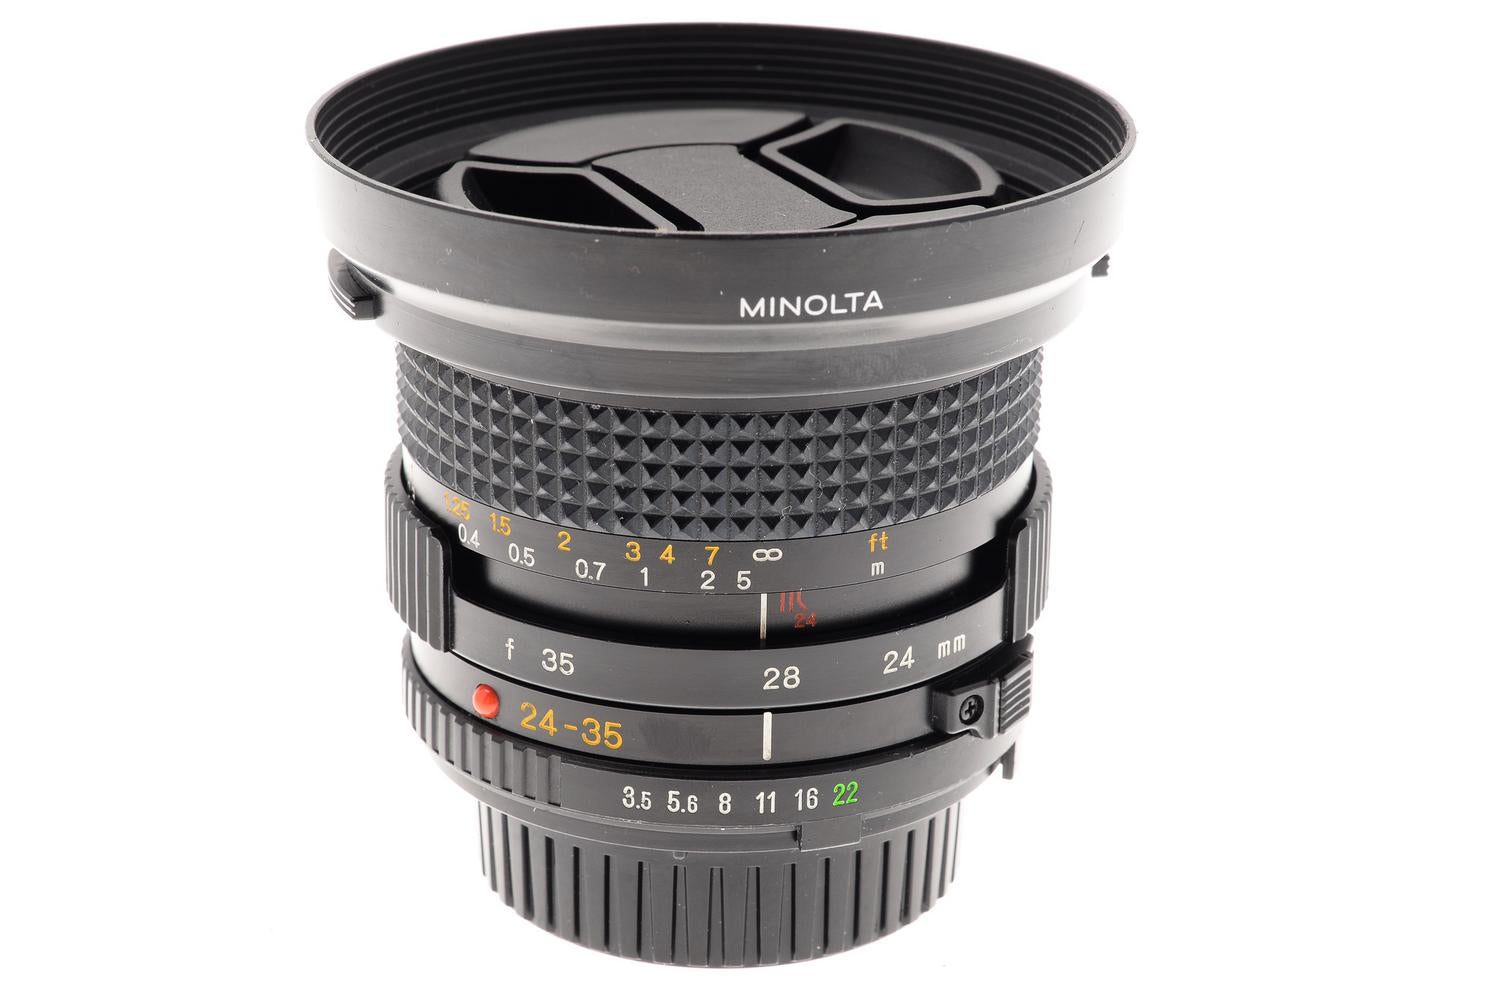 Minolta 24-35mm f3.5 MD Zoom - Lens